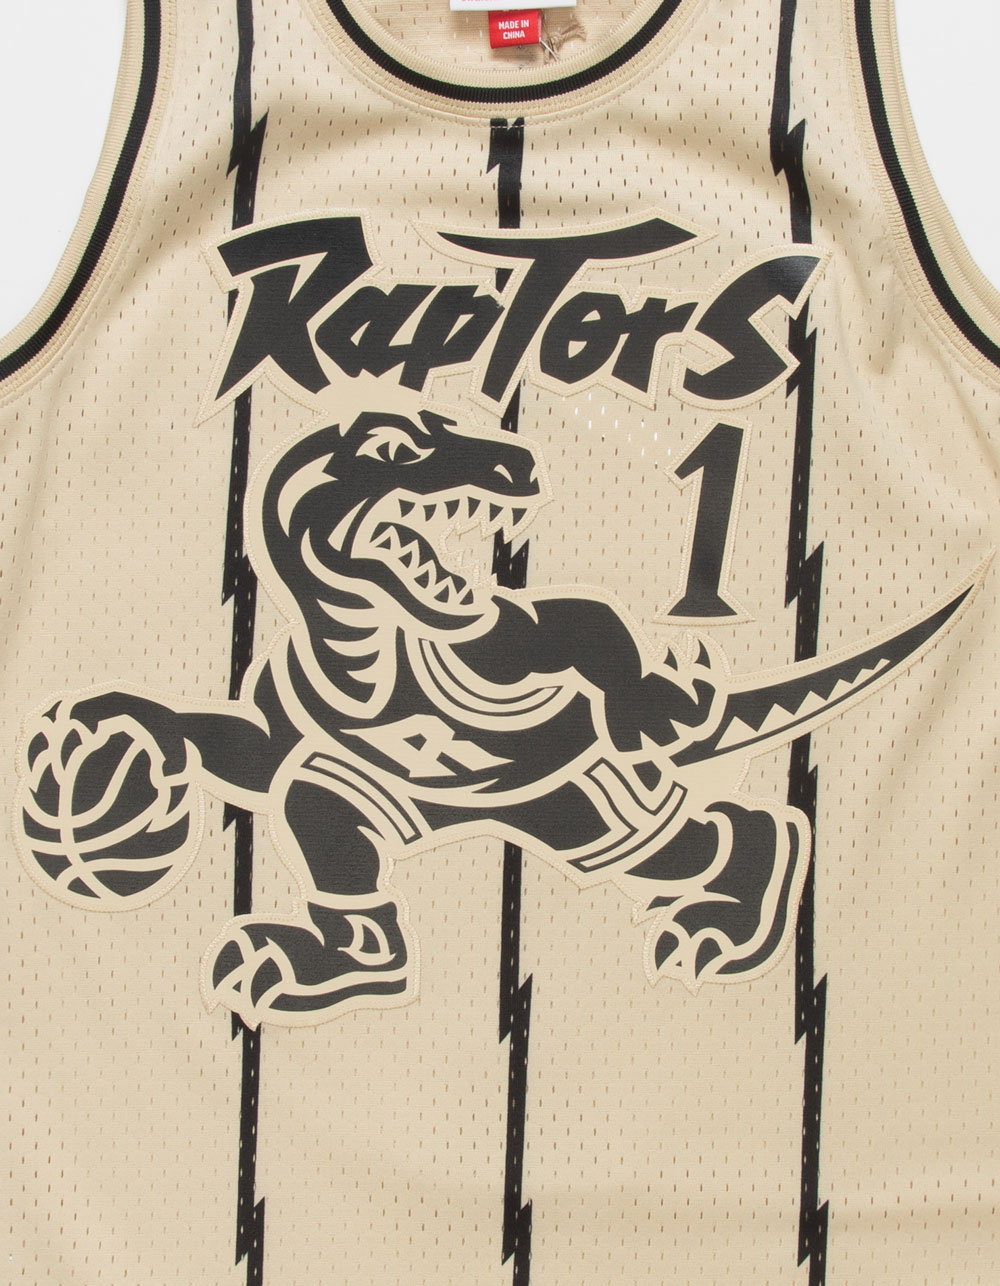 Mitchel & Ness Tracy McGrady Toronto Raptors Men's Swingman Jersey - Khaki 23 Khaki / 3XL